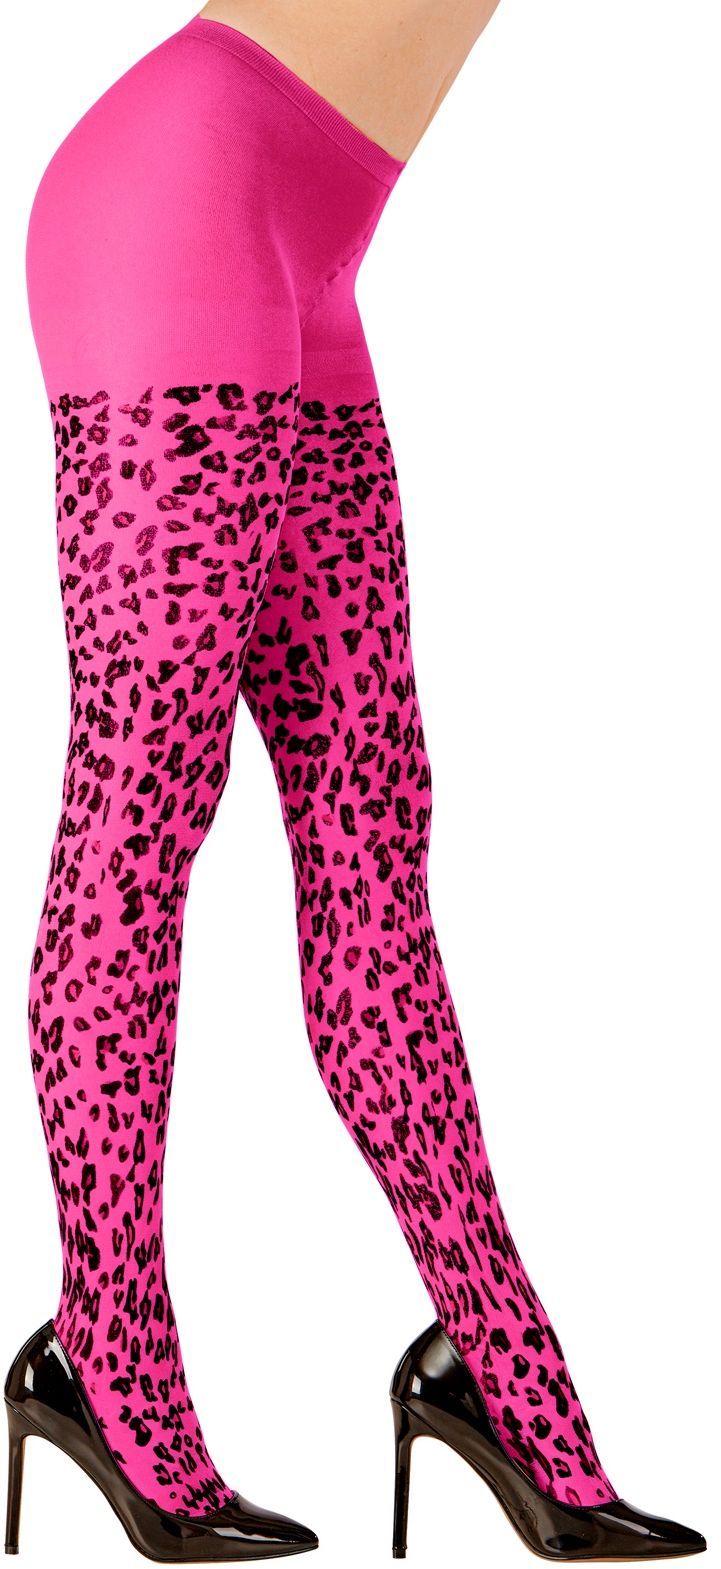 Roze luipaard print panty